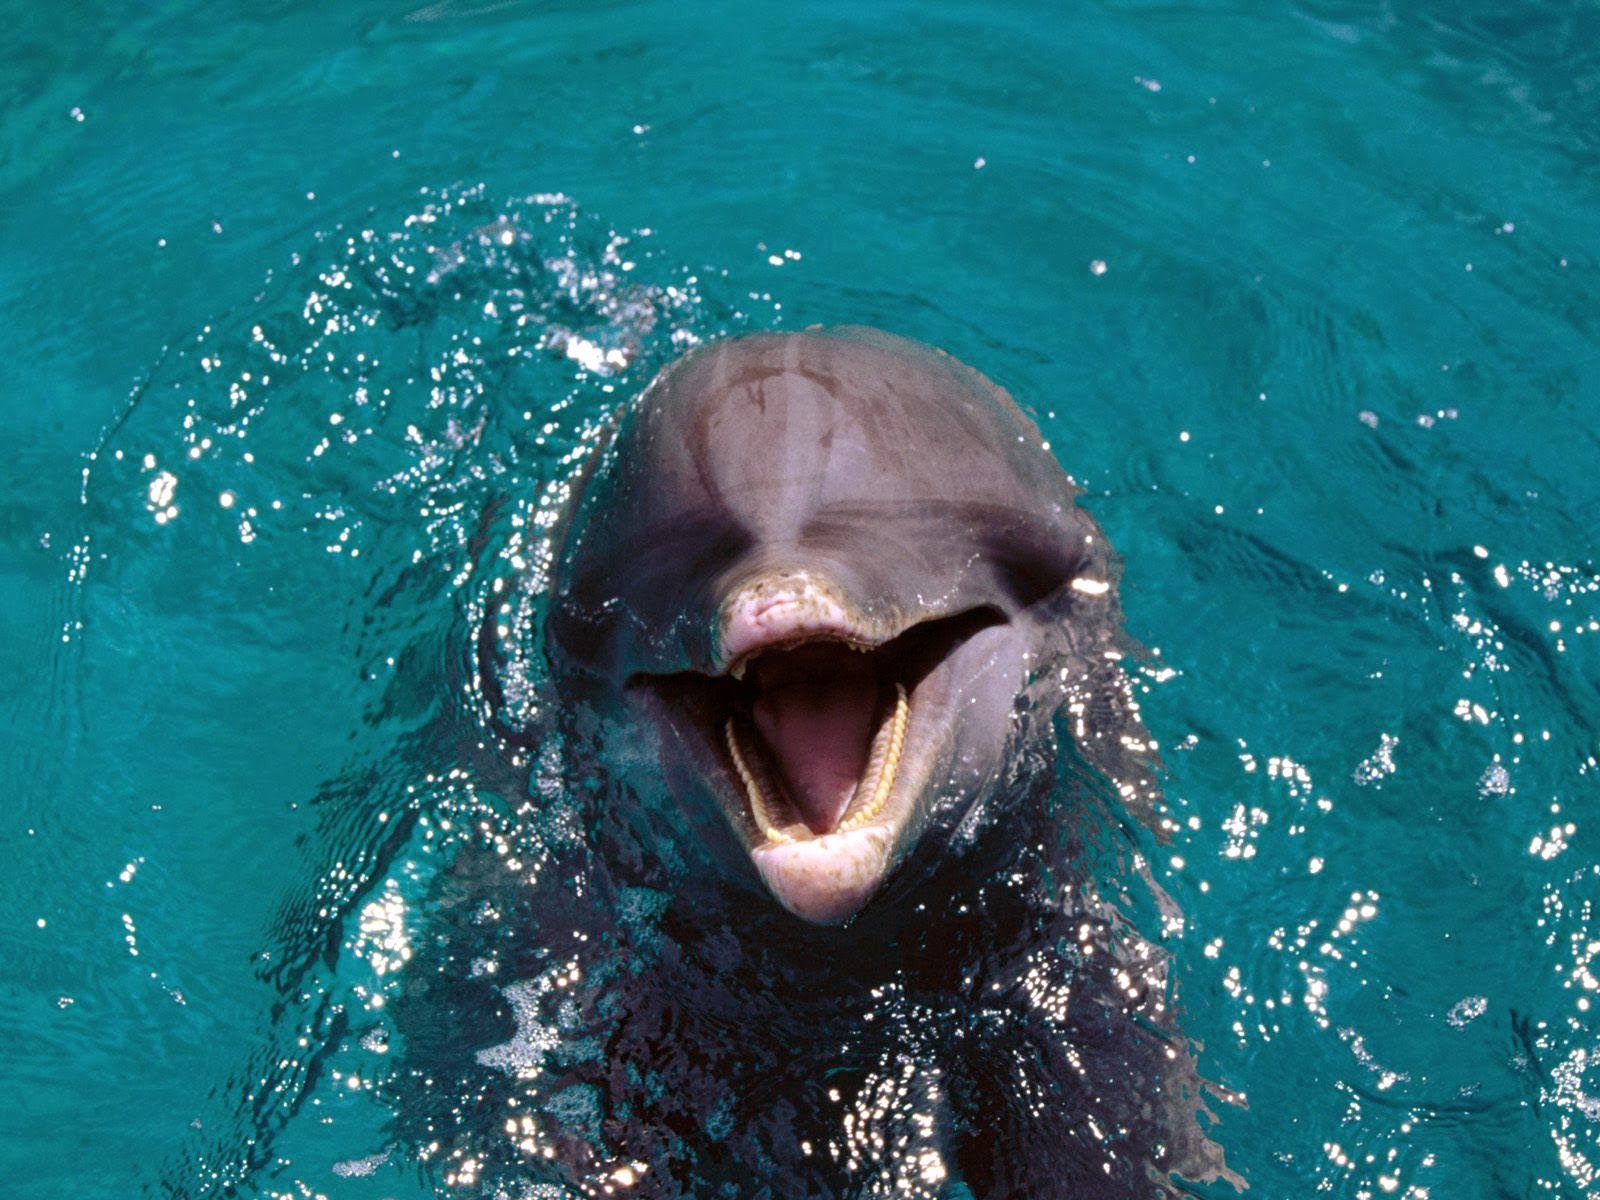 fondos de pantalla mejor valorados,delfín nariz de botella común,delfín nariz de botella,delfín,mamífero marino,delfín común de pico corto